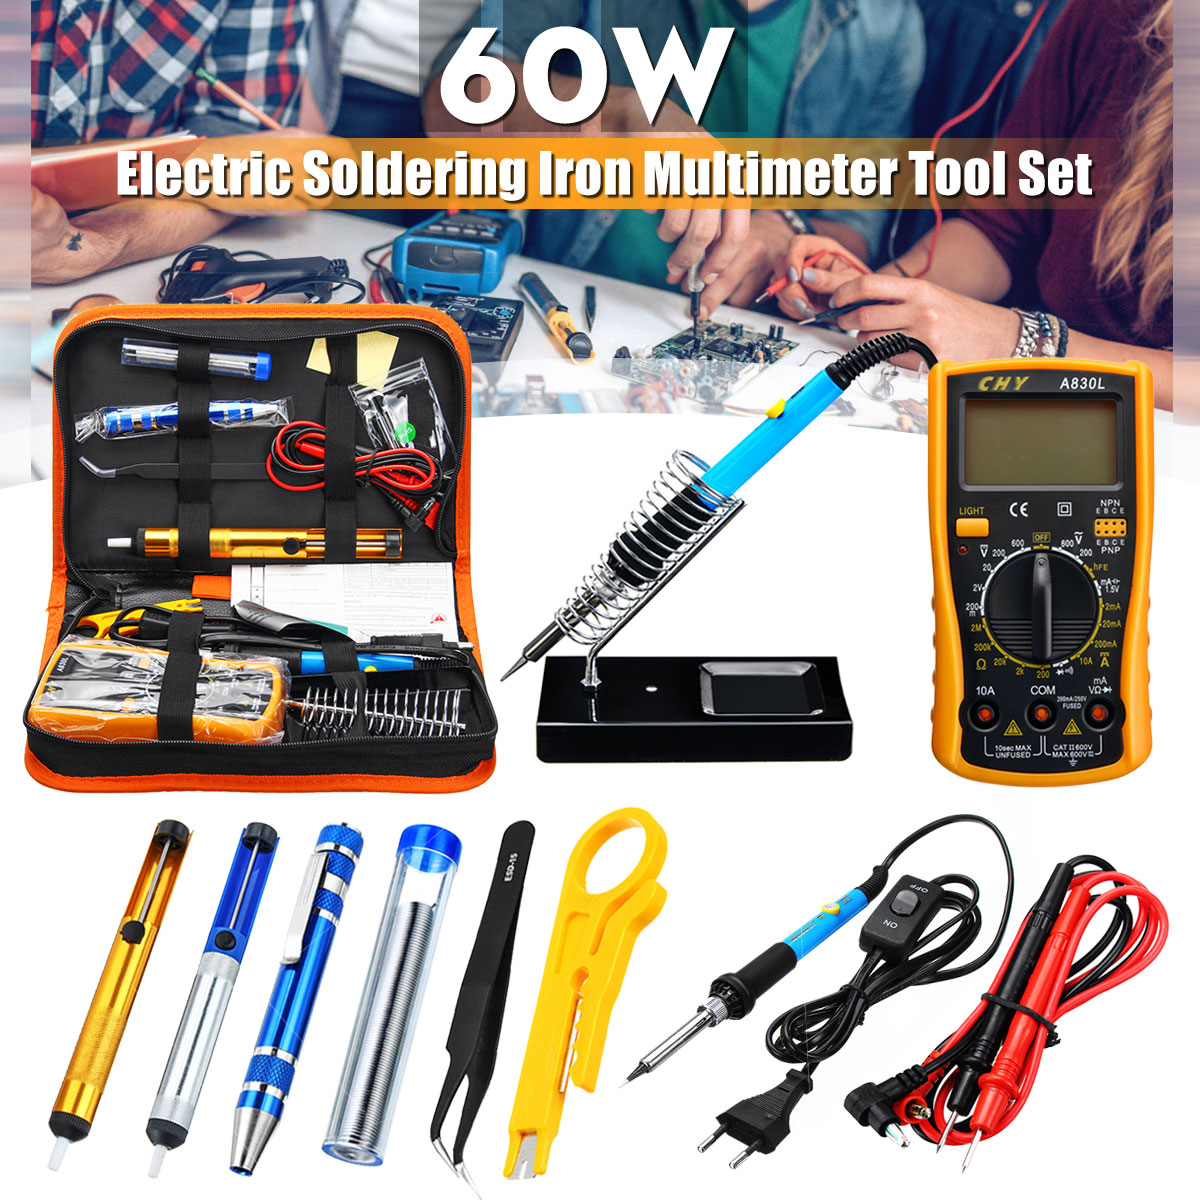 13Pcs-60W-Electric-Solder-Iron-Multimeter-Adjustable-Temperature-Welding-Tool-Set-1456448-1